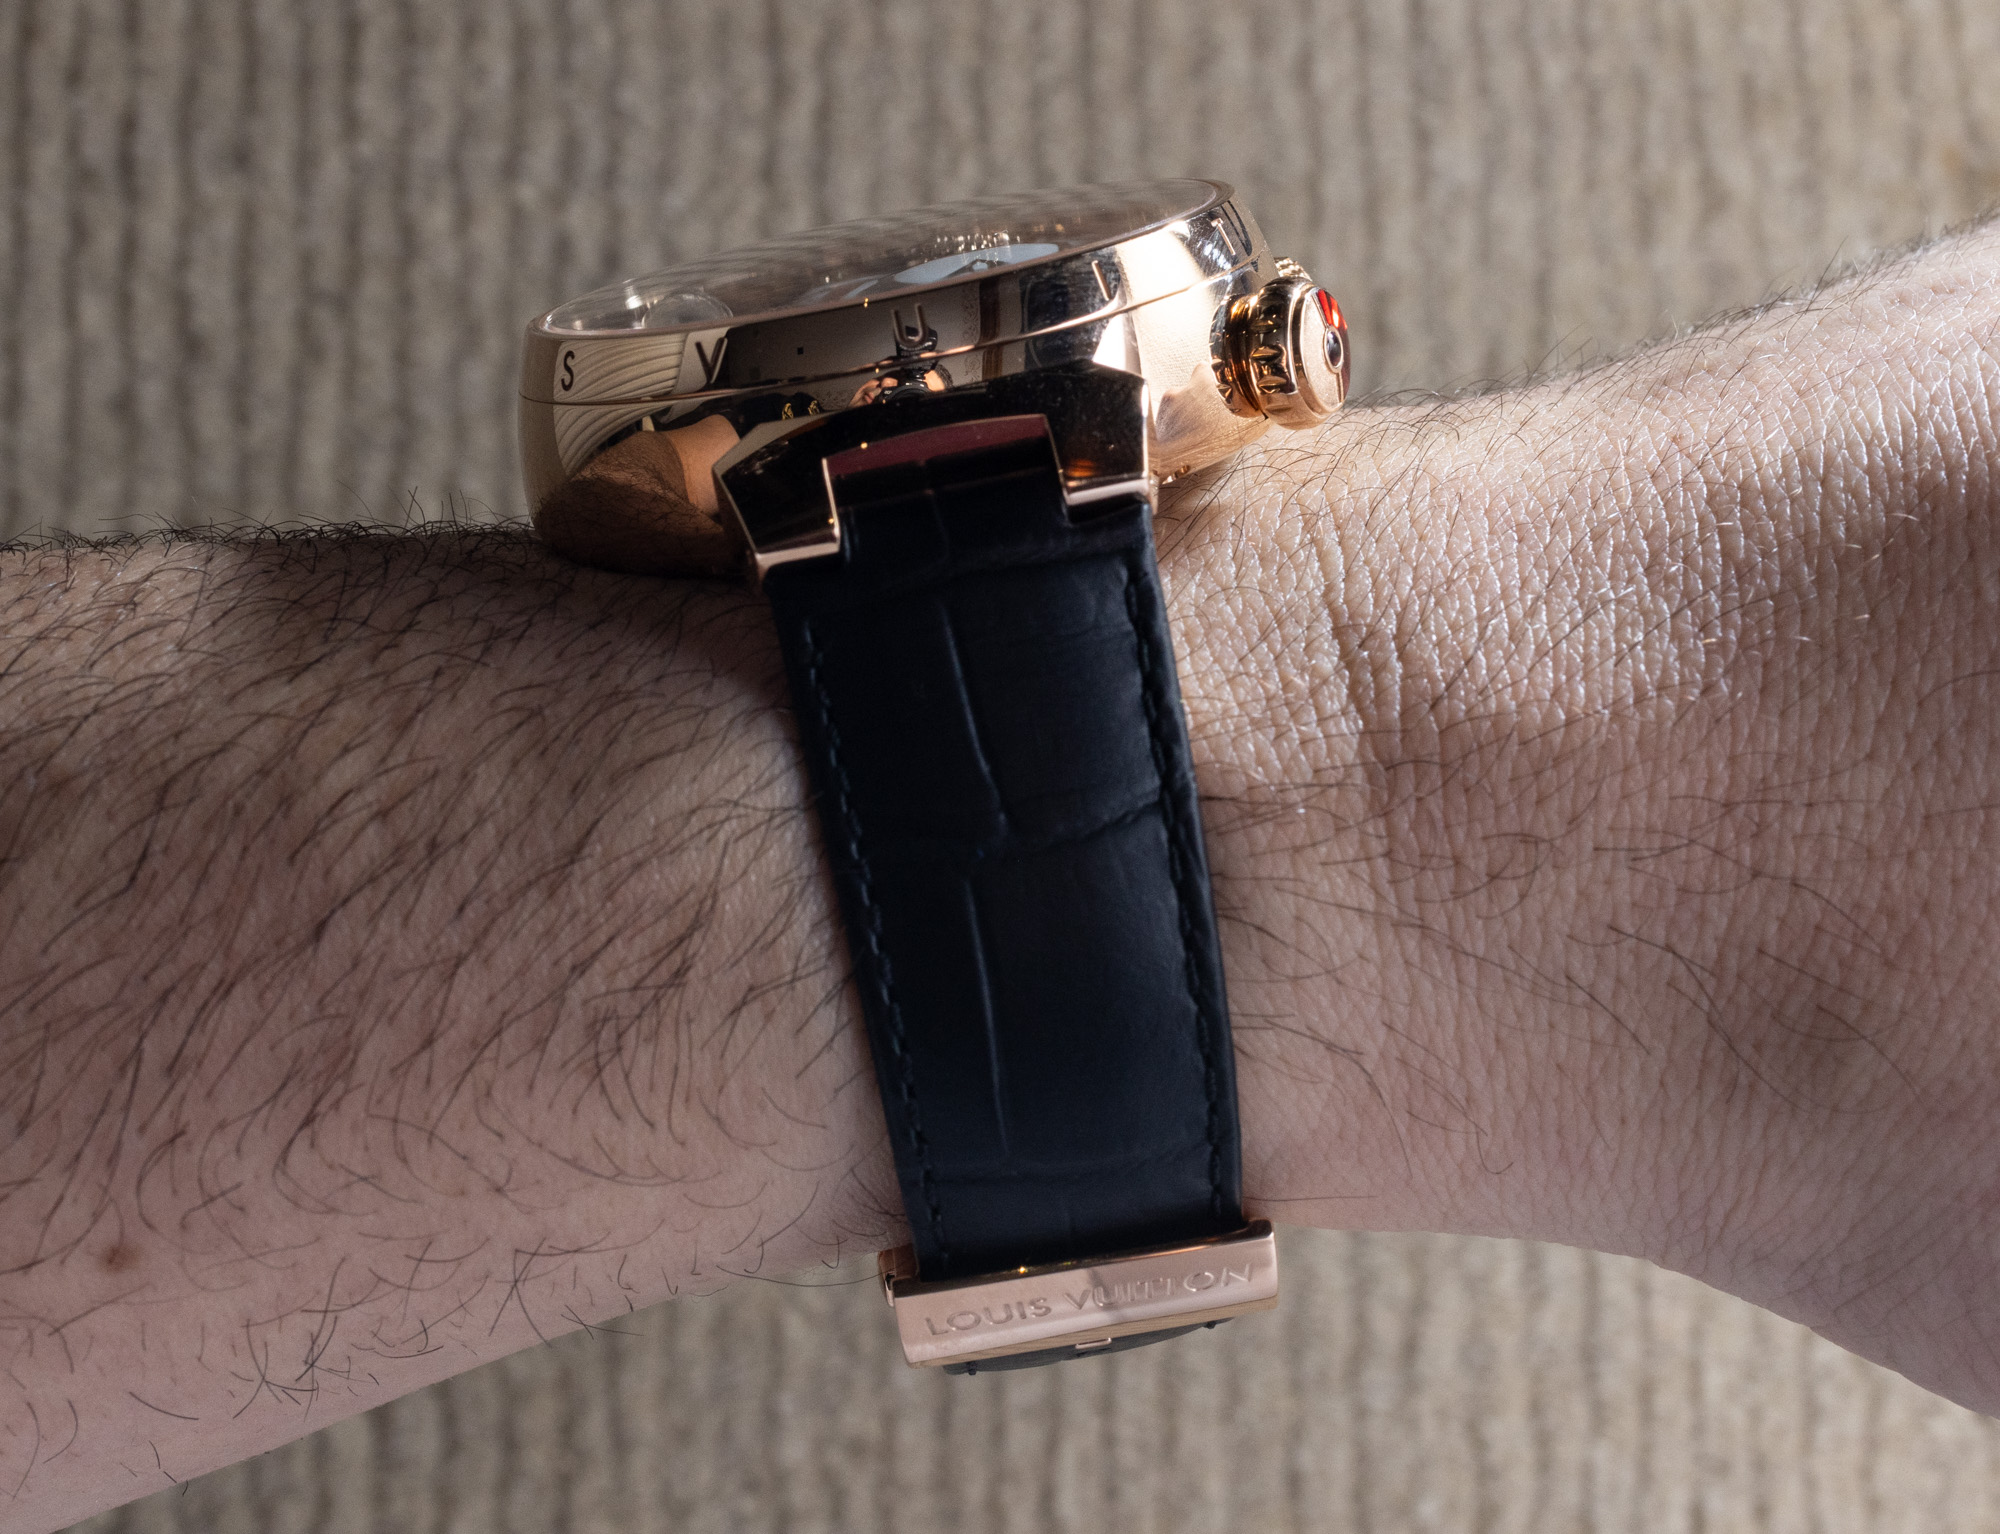 Louis Vuitton Tambour Opera Automata – Q1EN2Y – 575,620 USD – The Watch  Pages